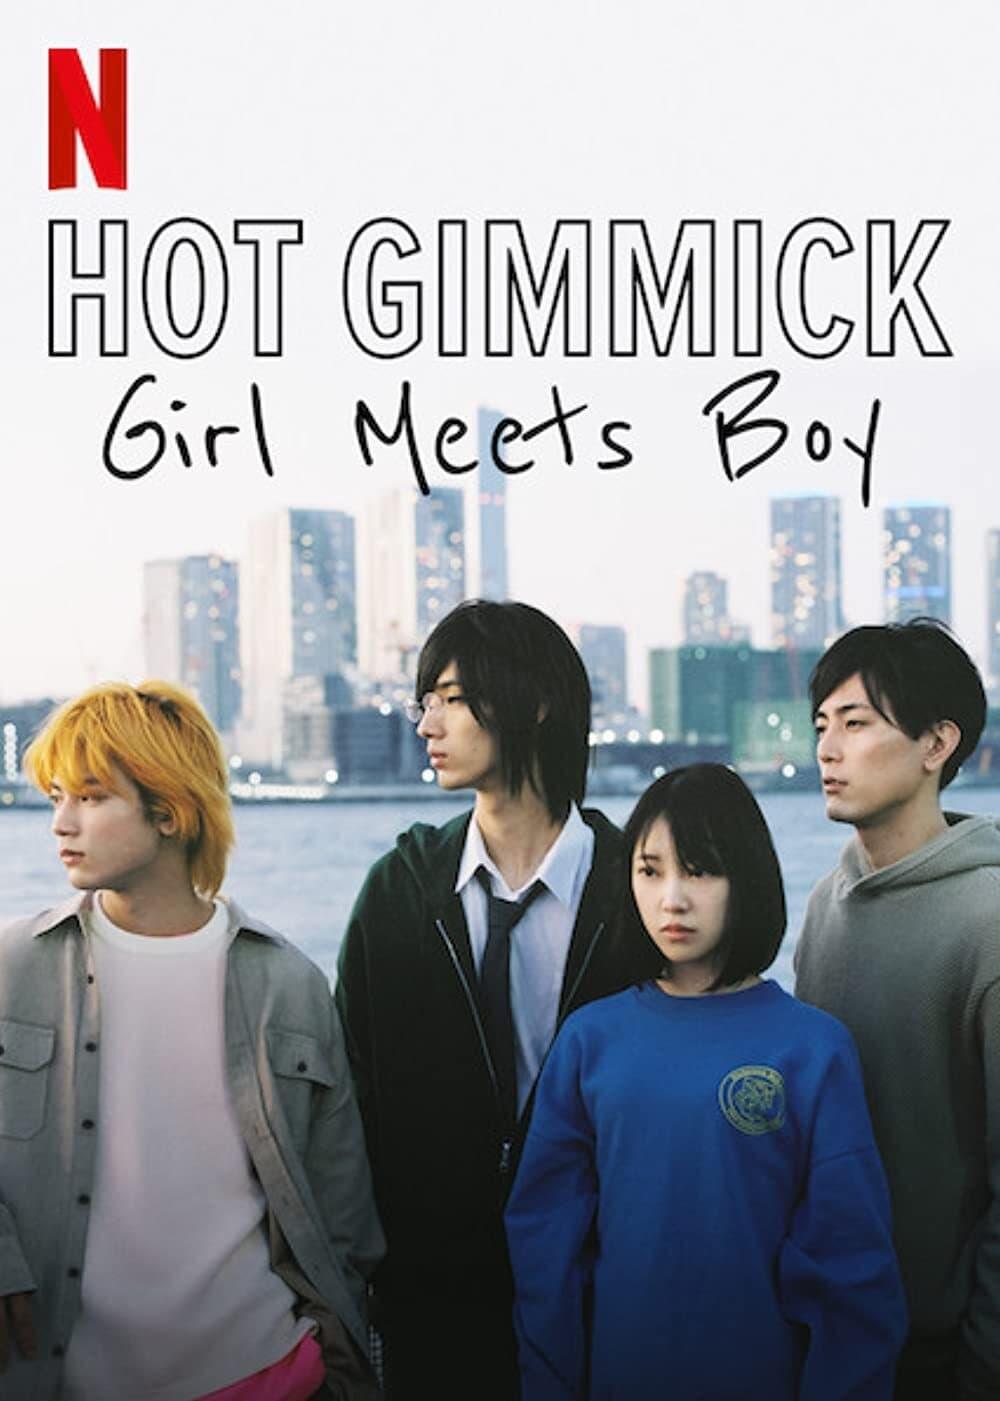 Hot Gimmick: Girl Meets Boy poster